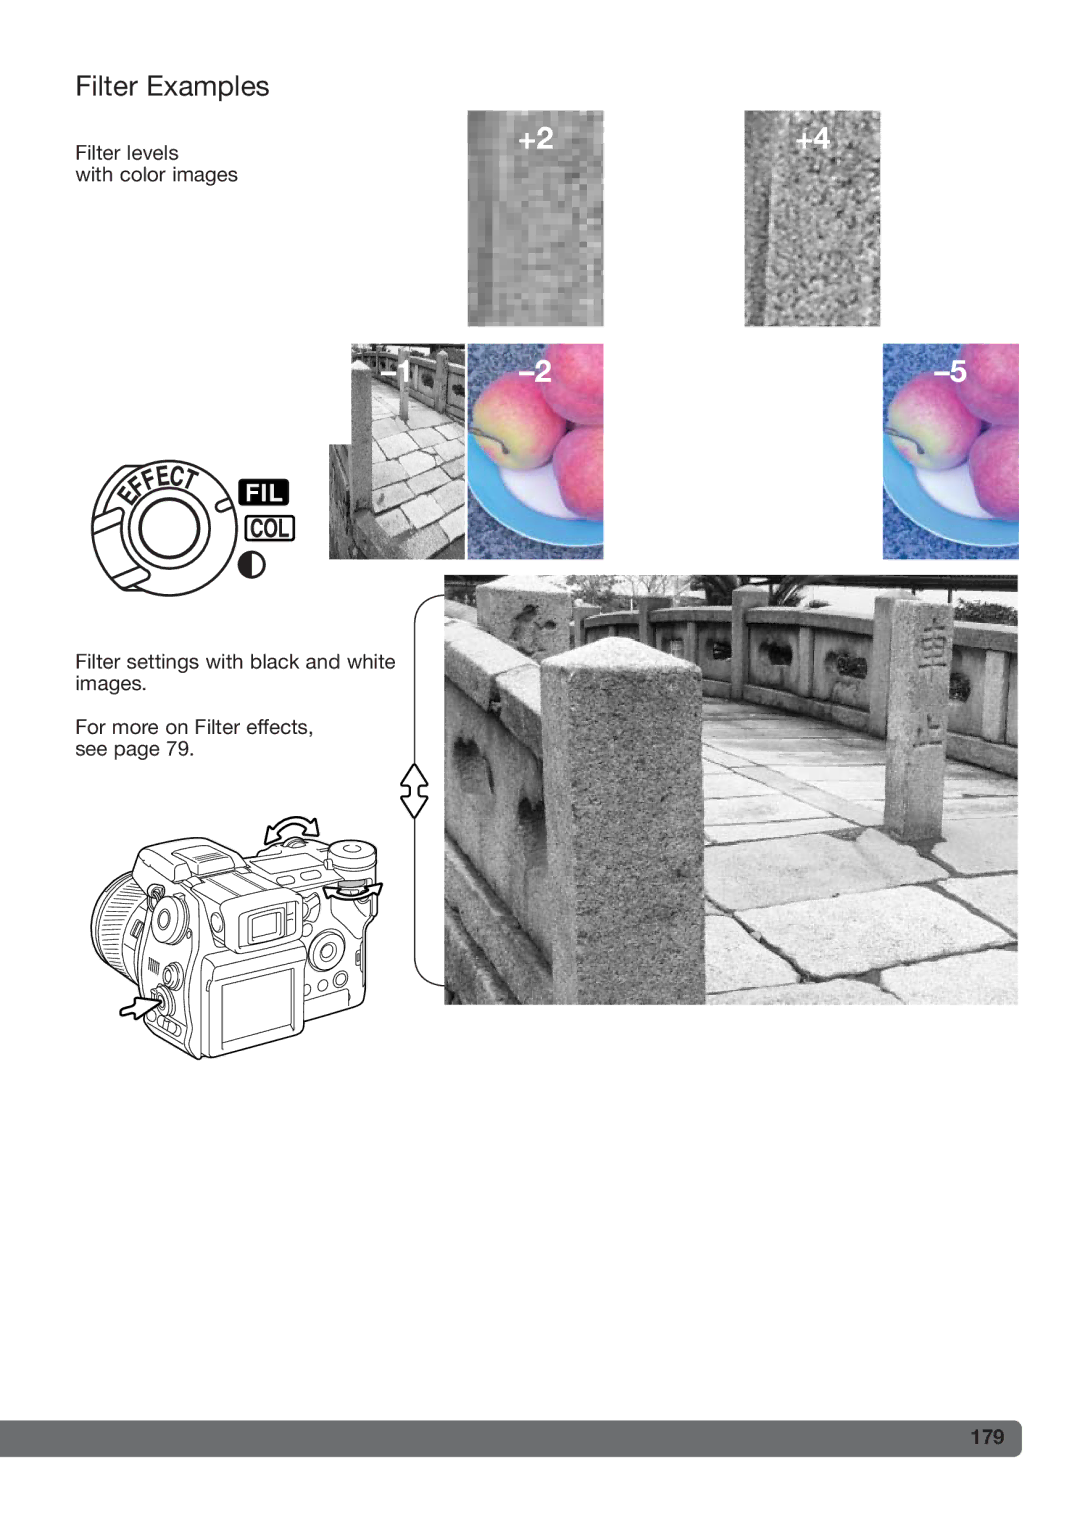 Konica Minolta DiMAGE_A2 instruction manual Filter Examples, 179 